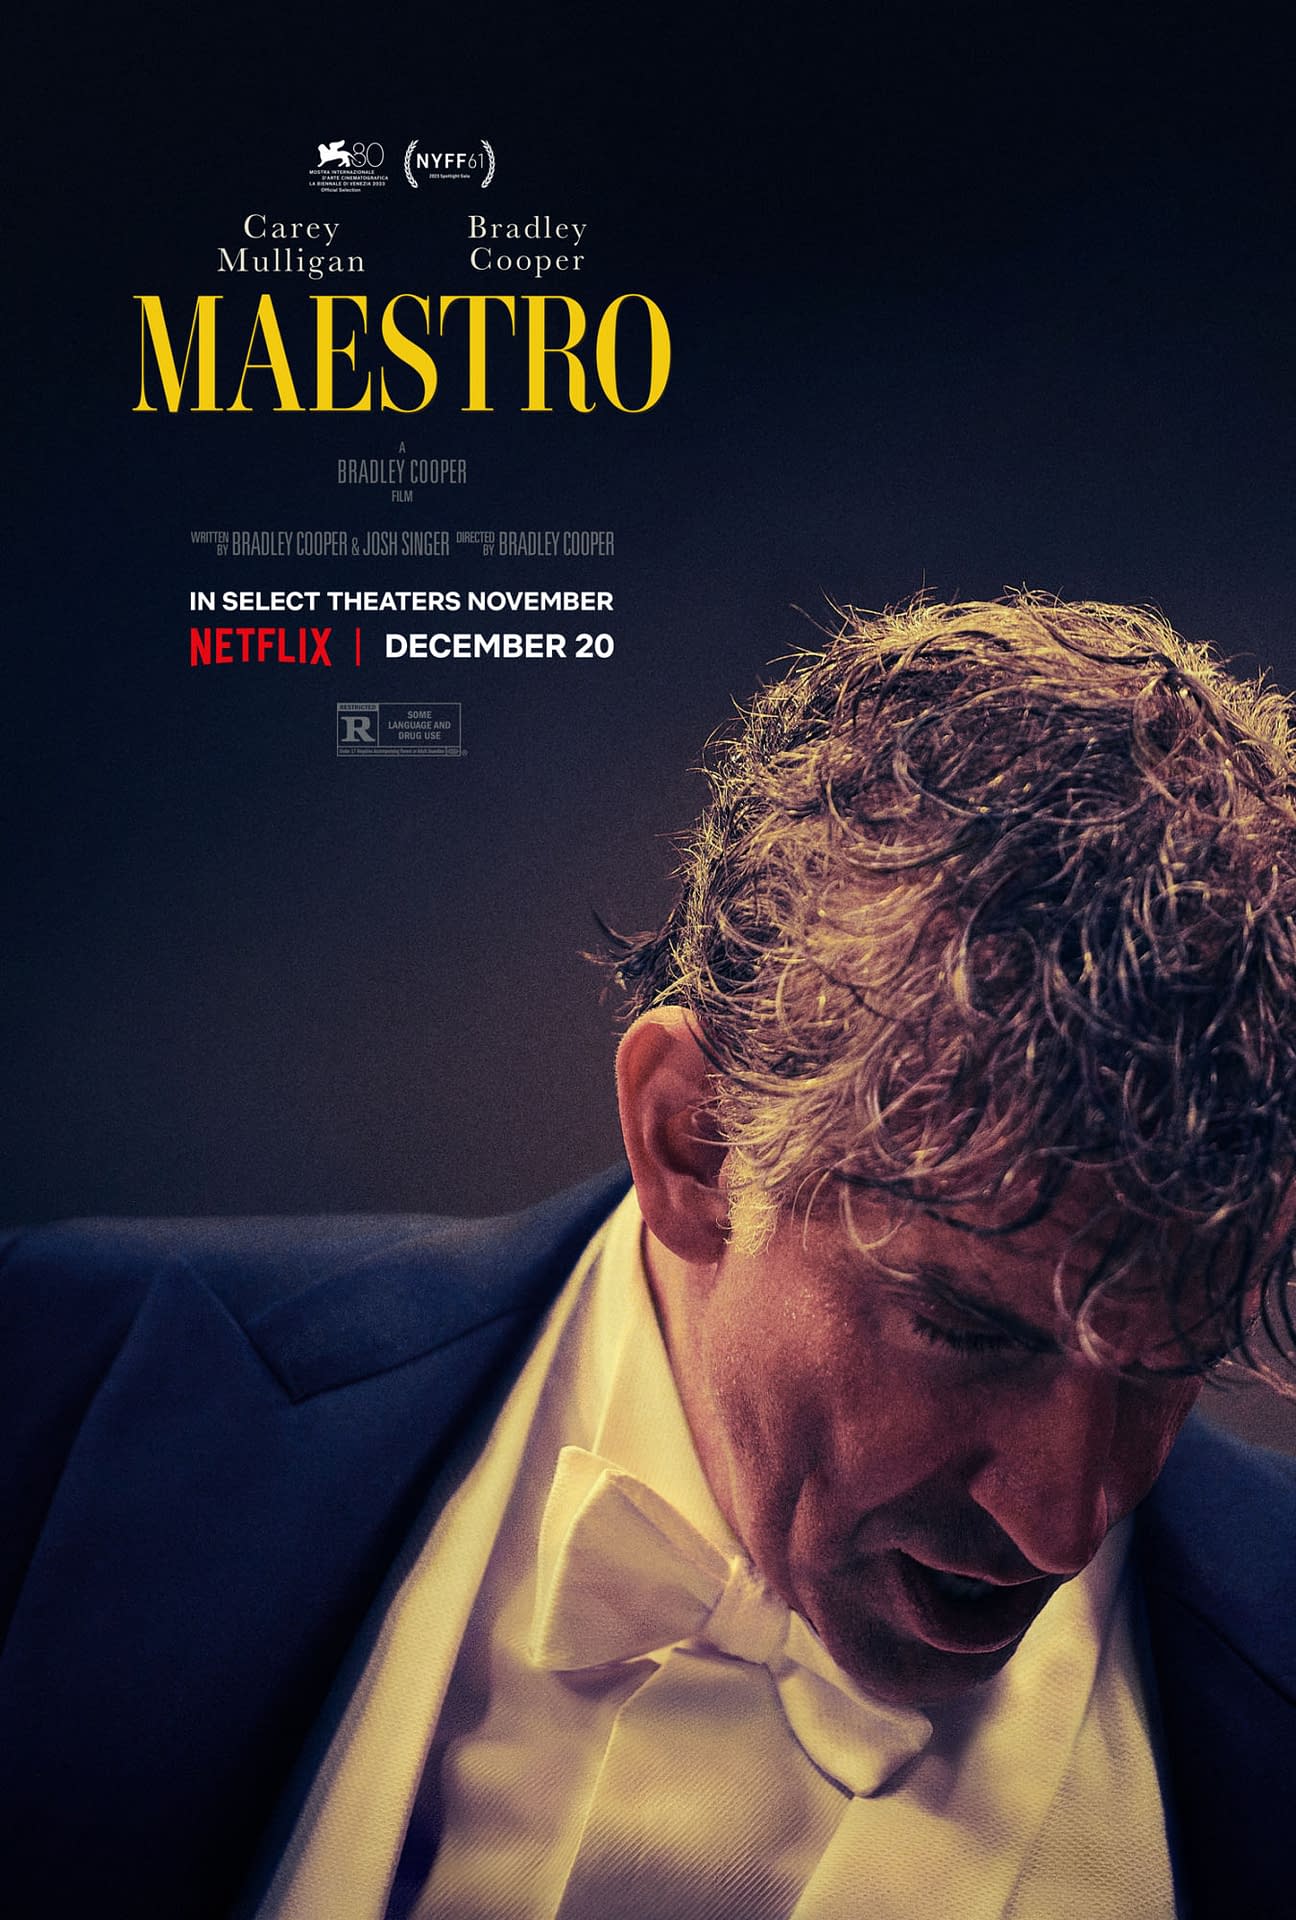 Now Casting: Play Audience Members in Bradley Cooper's 'Maestro